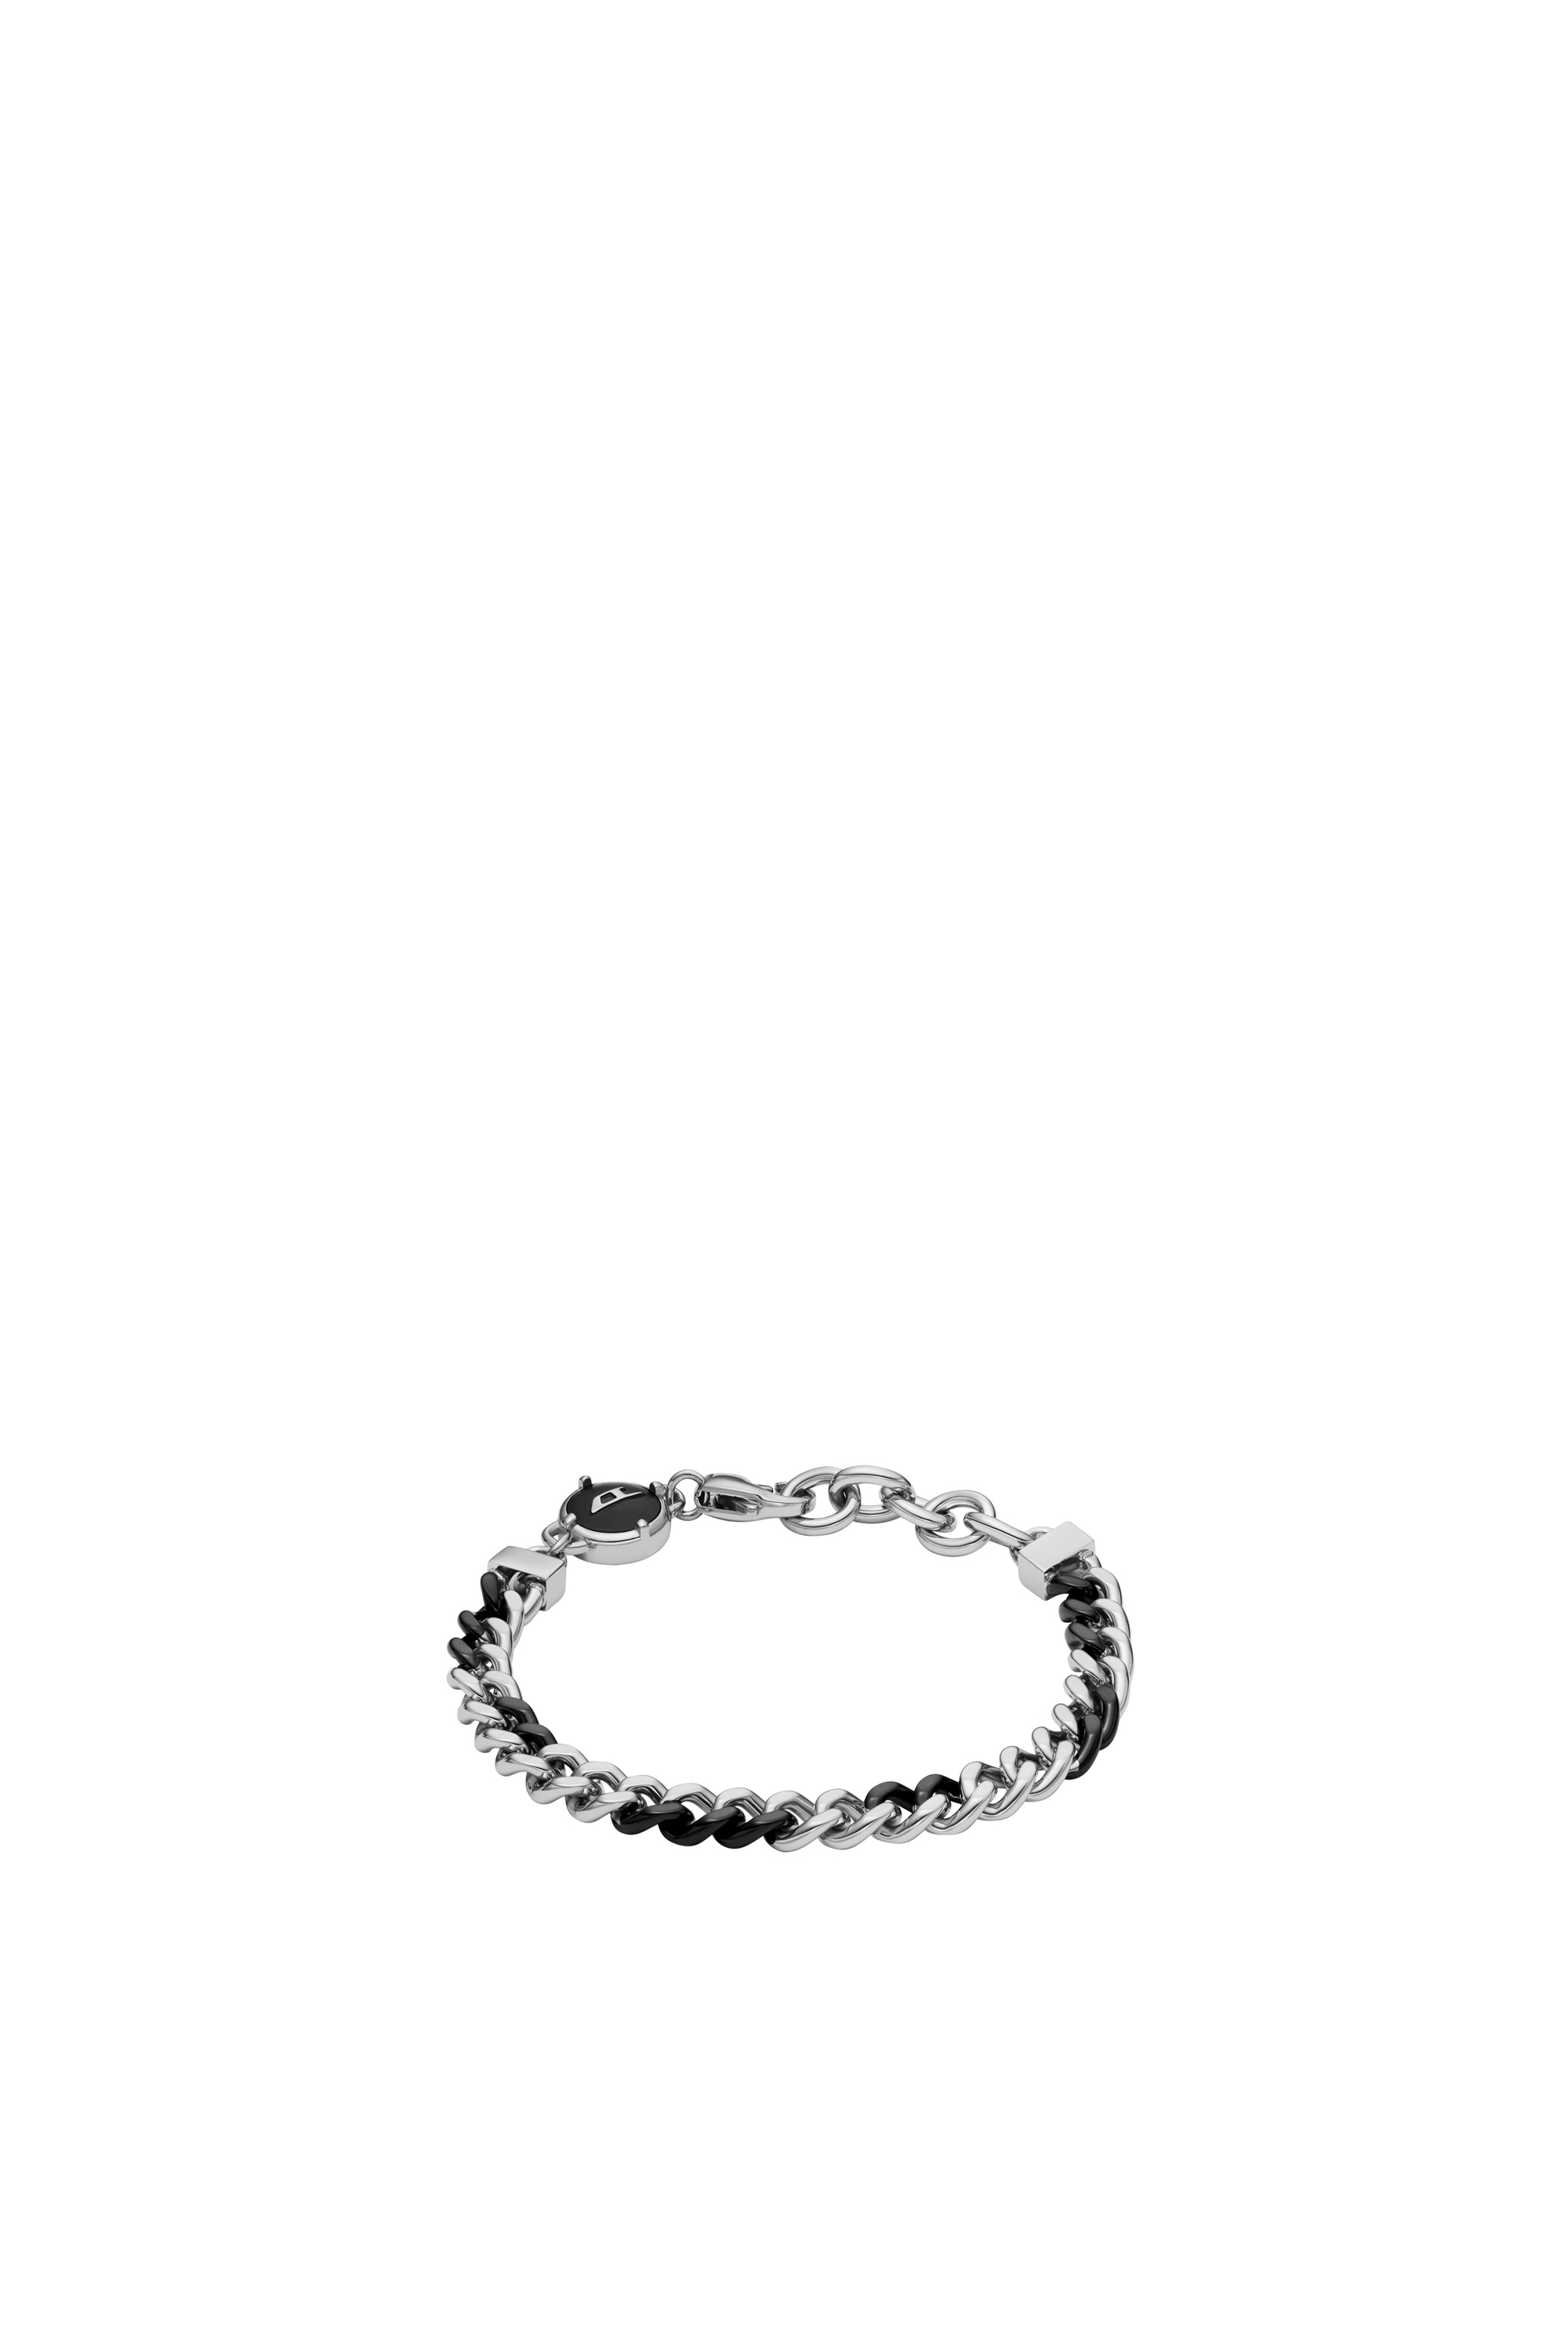 Diesel - DX1498, Male Two-Tone stainless steel chain bracelet in シルバー - Image 1